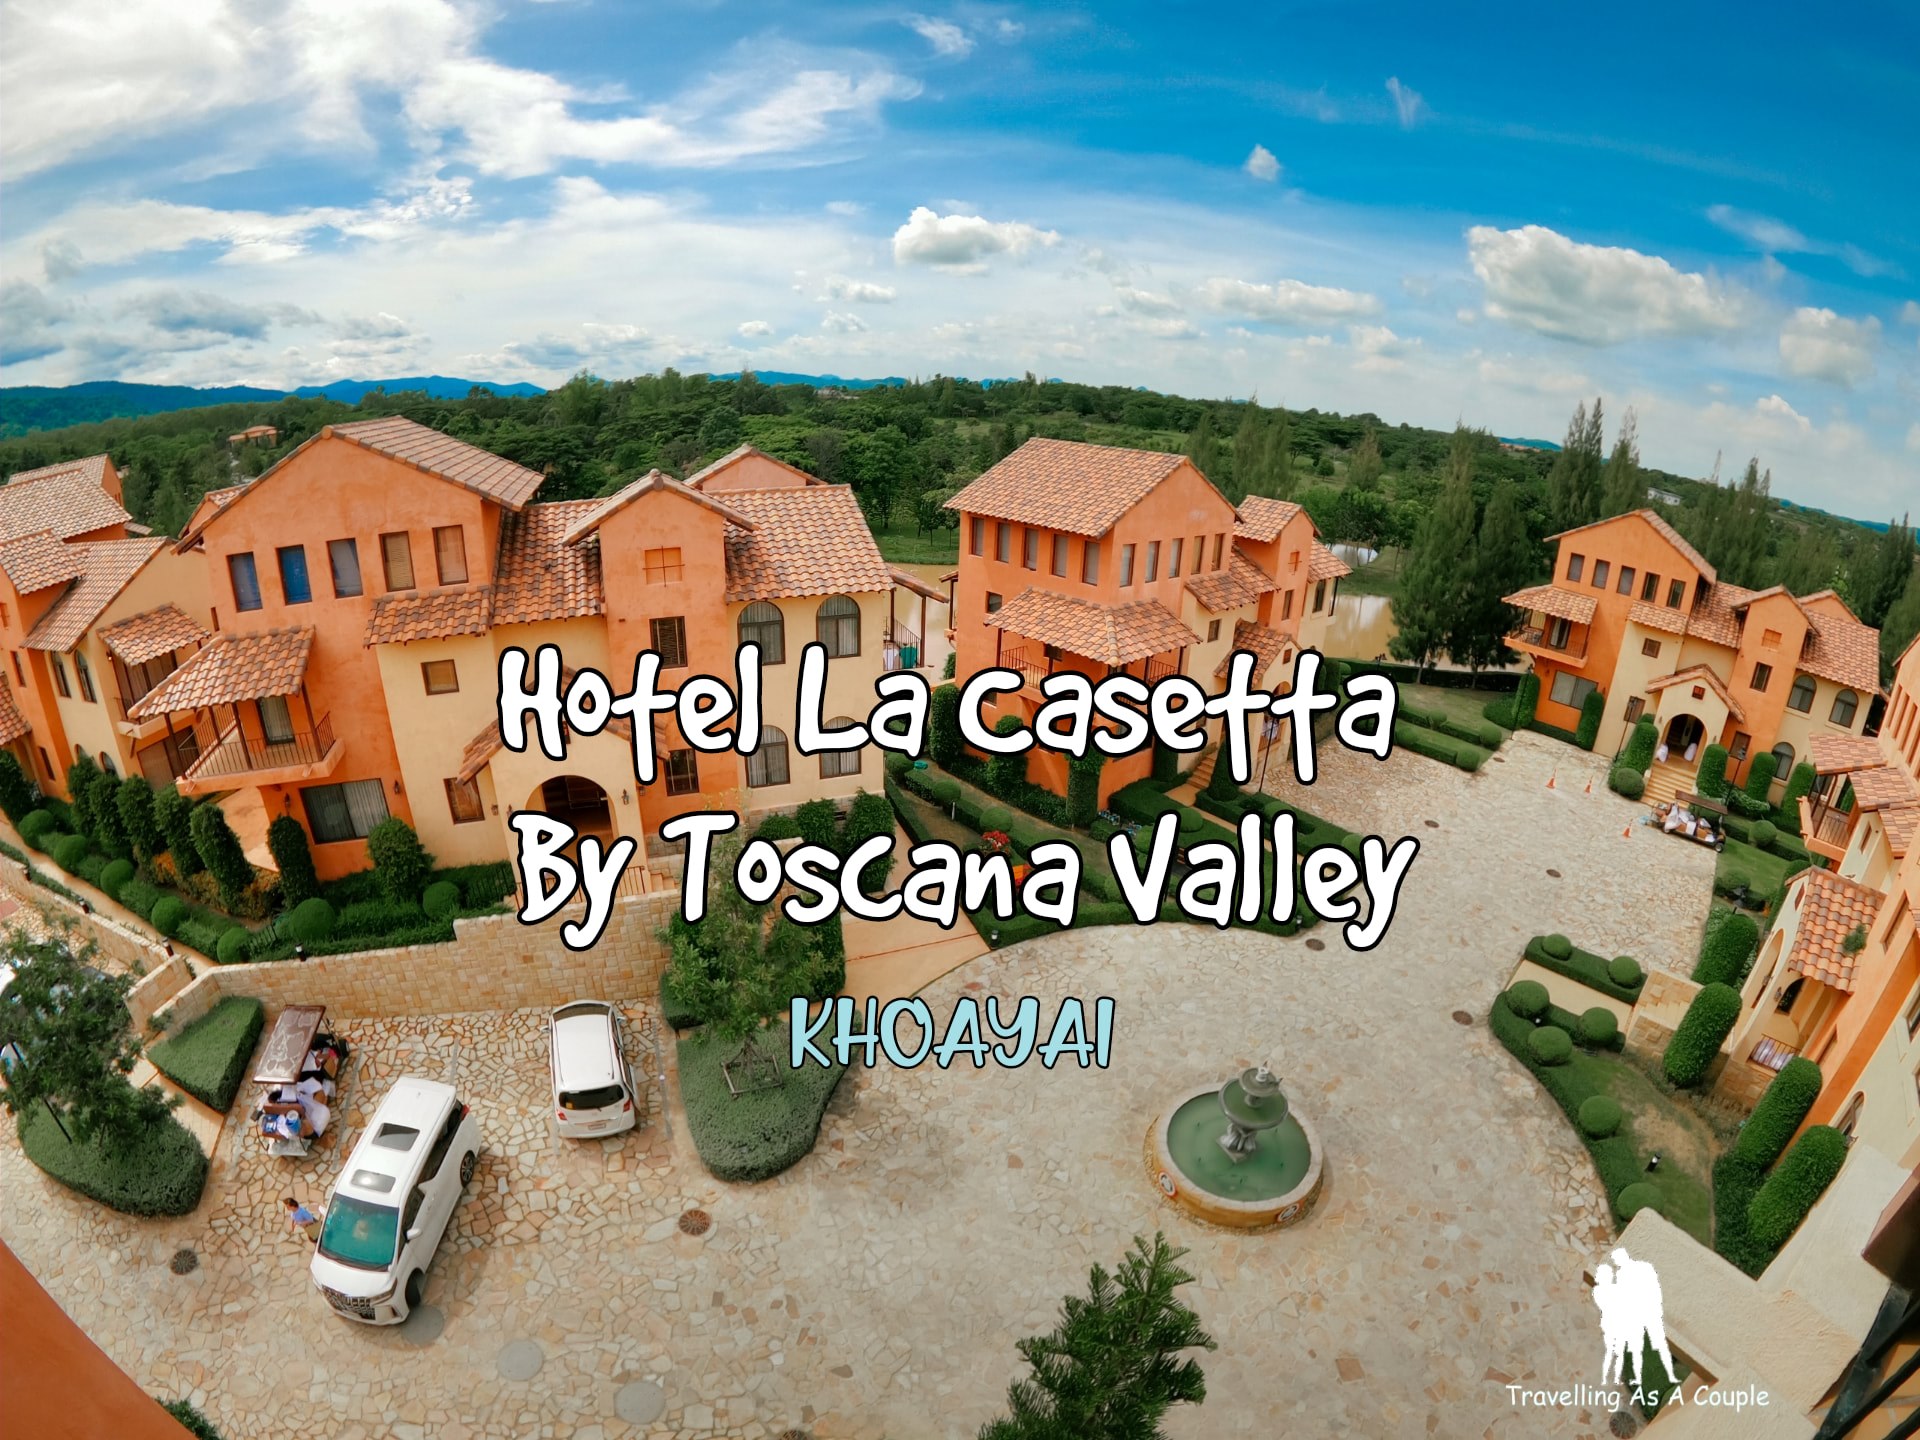 Travelling As A Couple] : Hotel La Casetta เขาใหญ่ : เที่ยวเมืองไทยฟีล เหมือนไปอิตาลี - Pantip